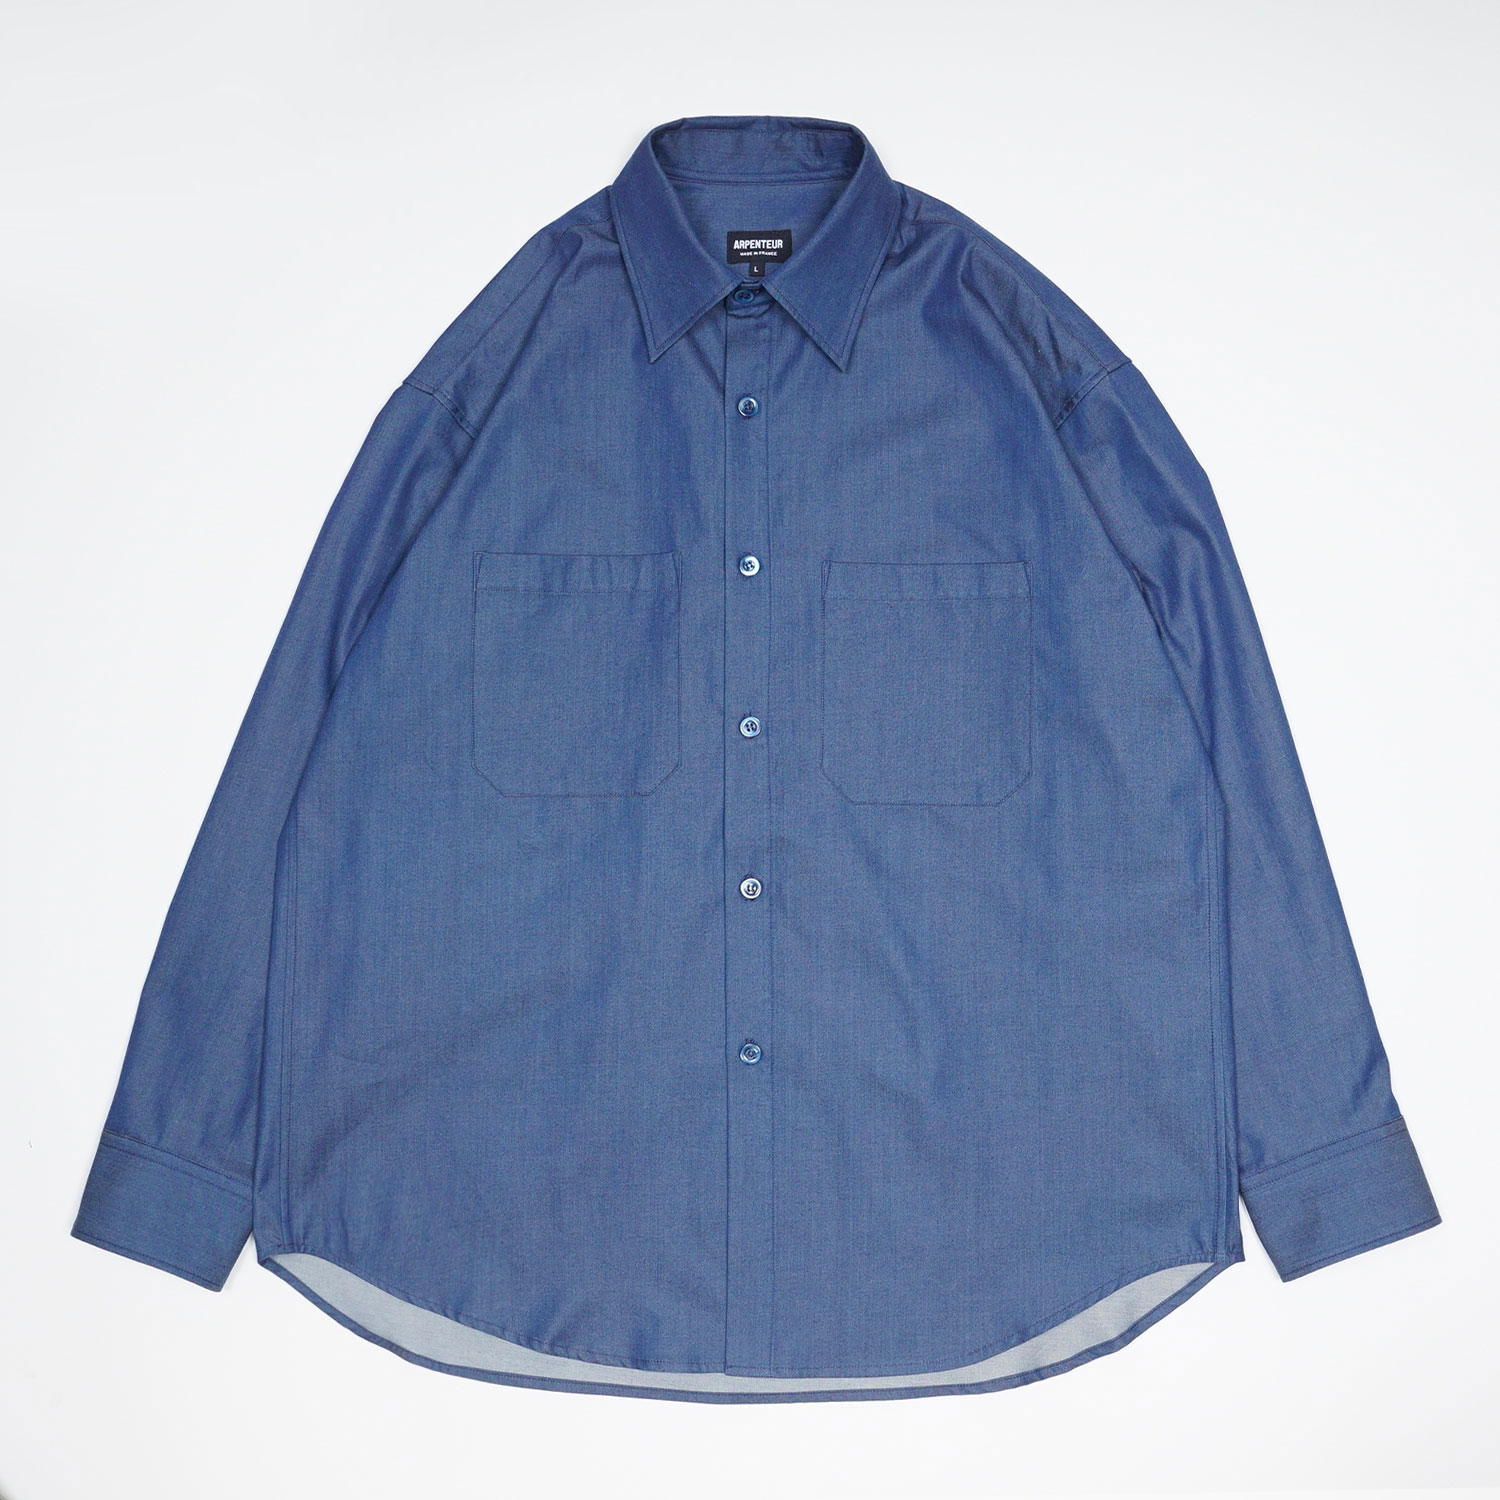 DORIS shirt in Indigo blue color by Arpenteur